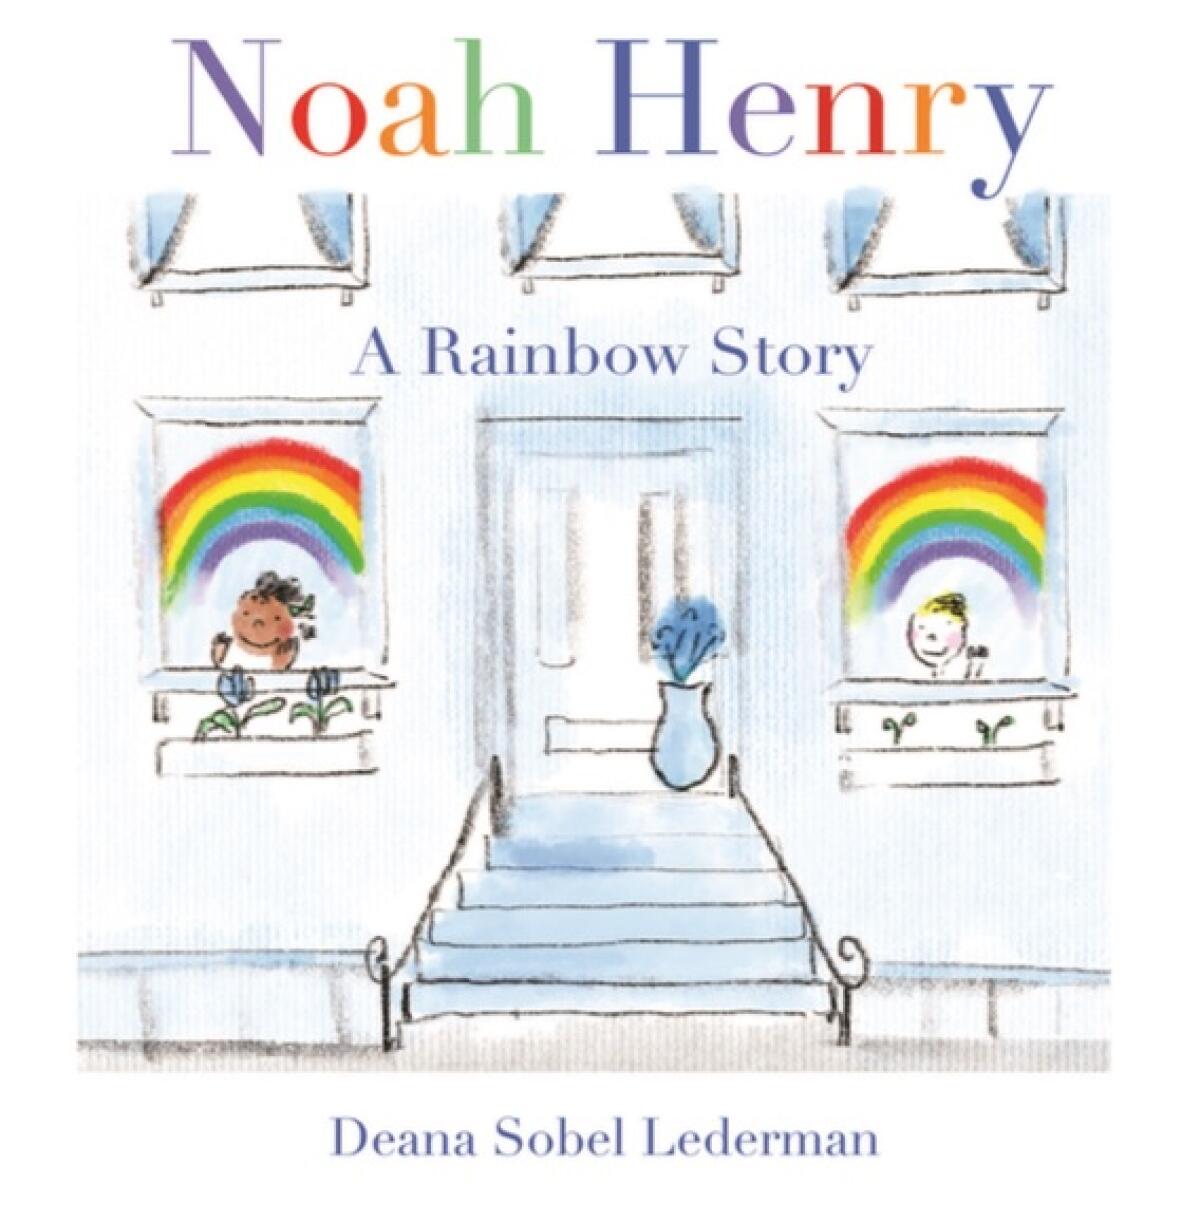 Deana Sobel Lederman has published a series of children's picture books.